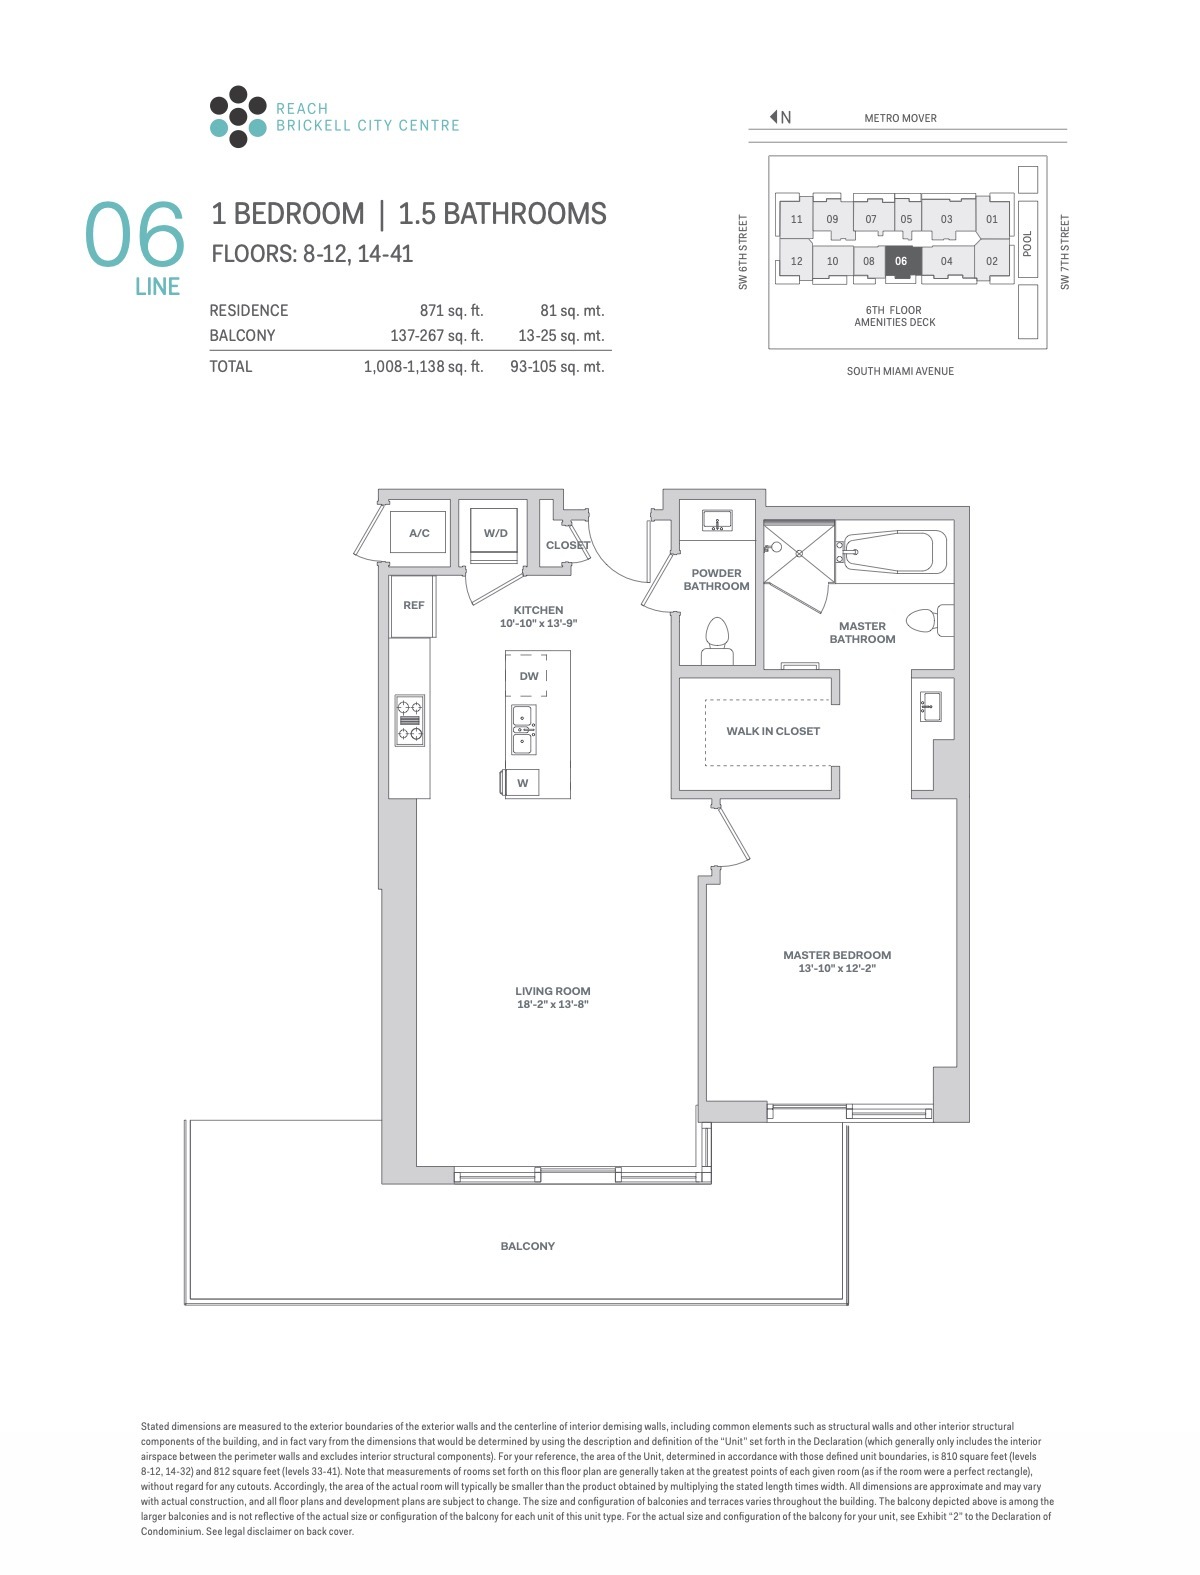 Floor Plan for Reach Brickell City Centre, Line 06